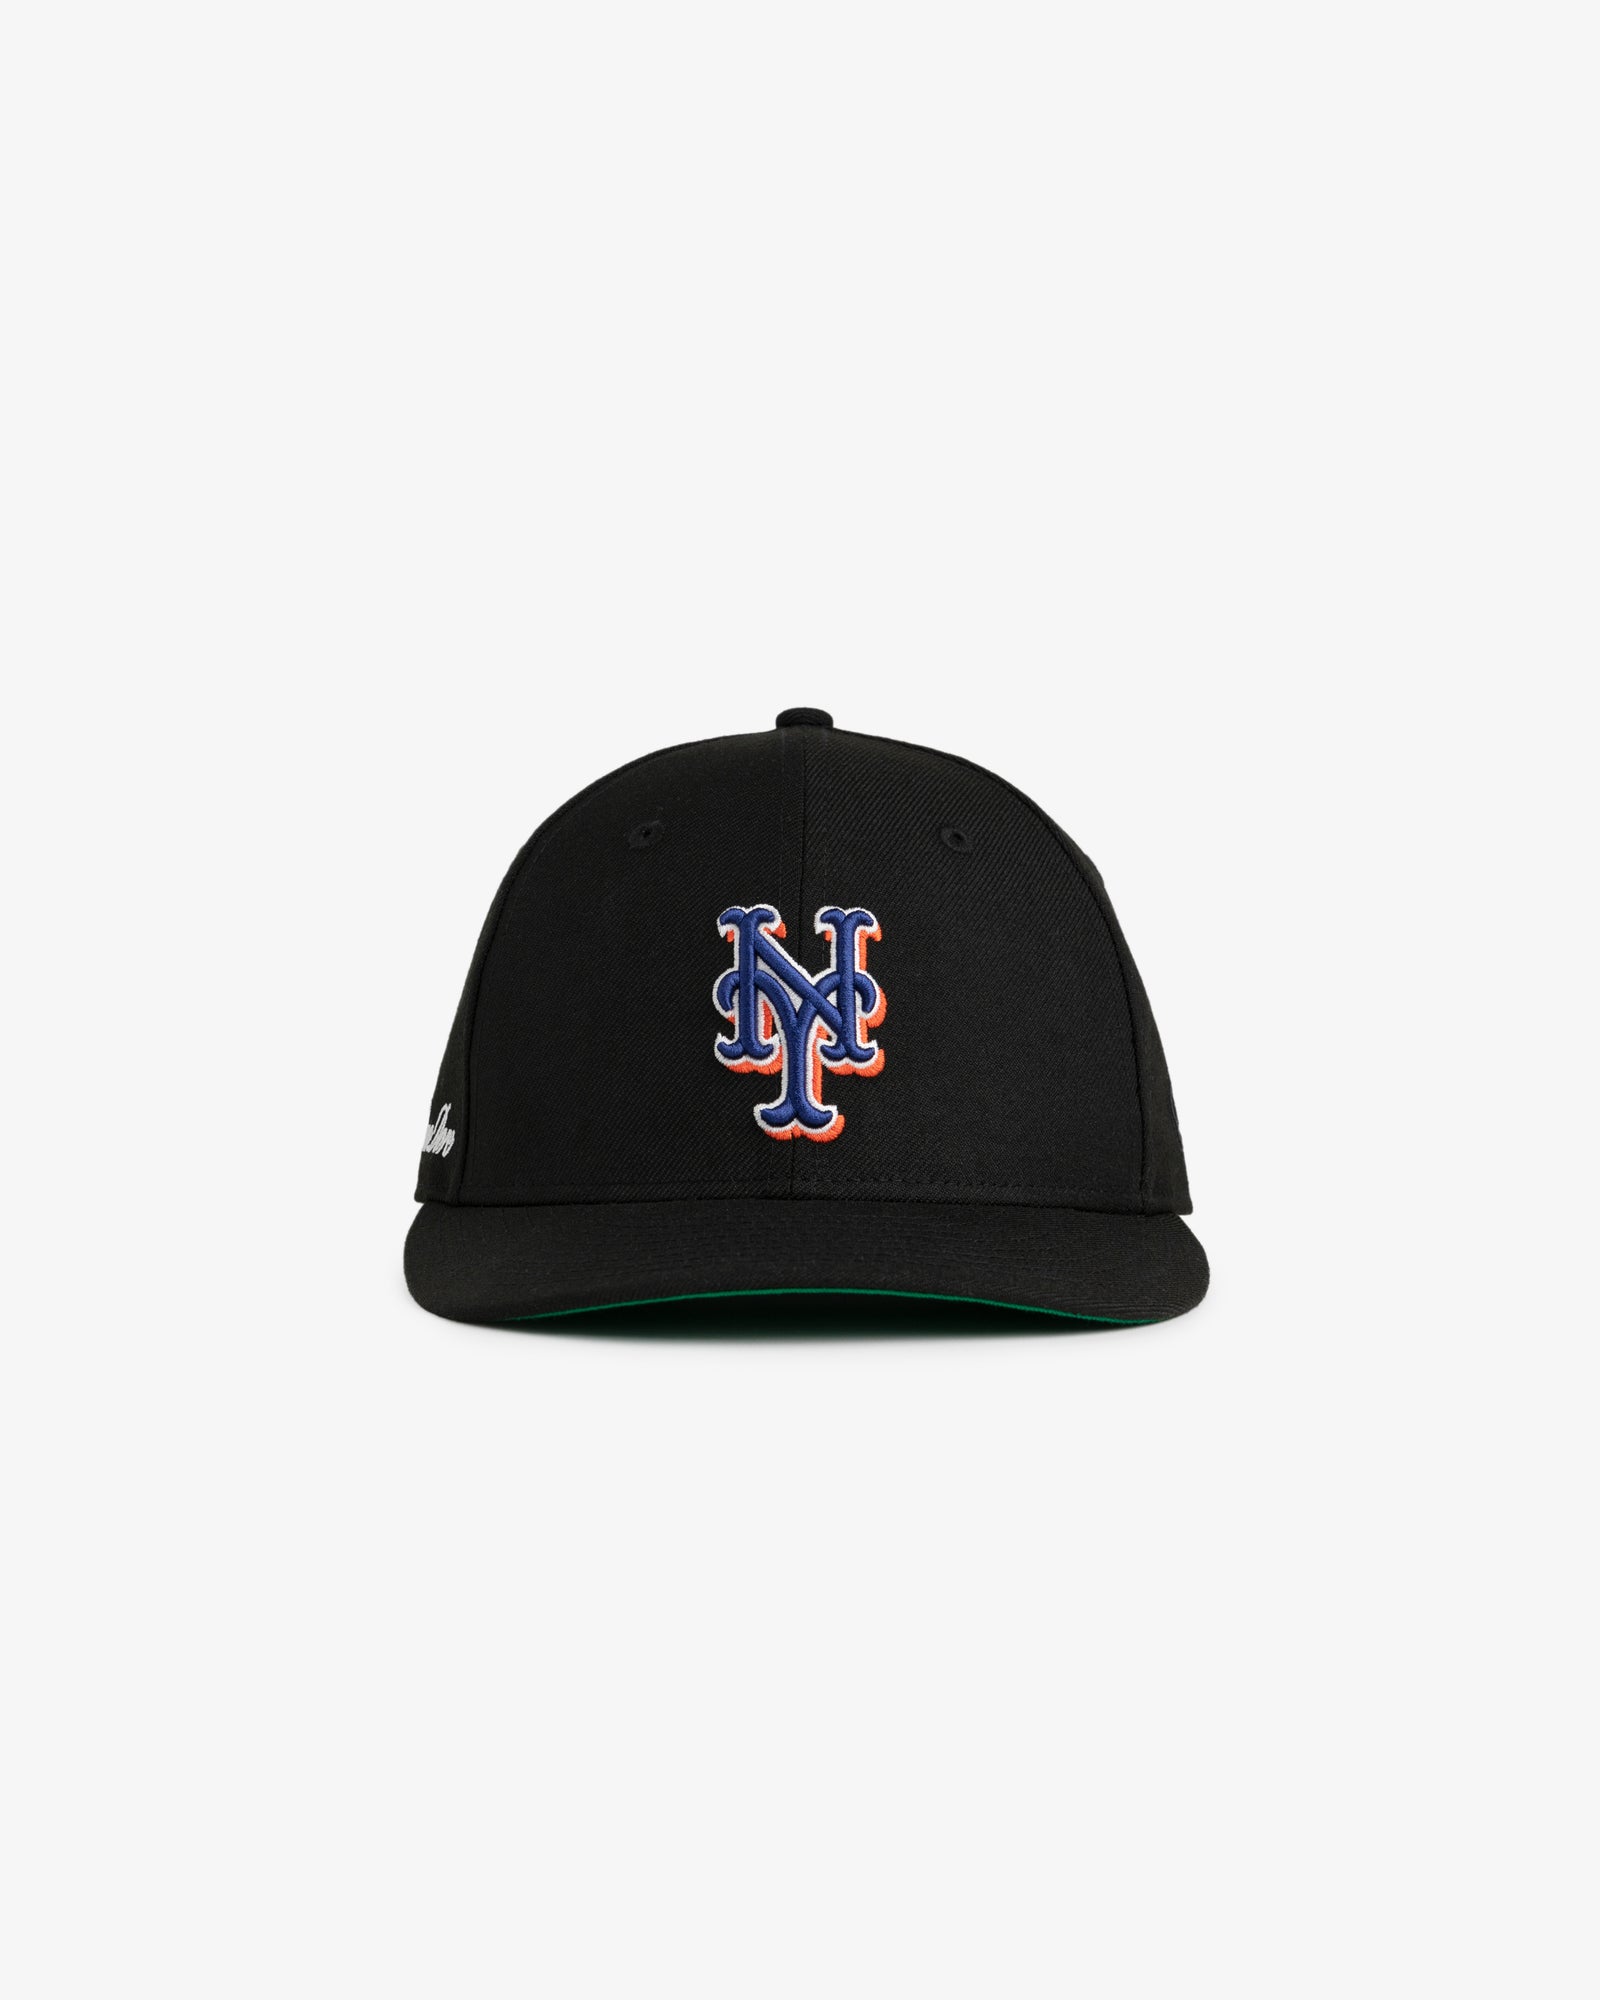 New Era Mets Ballpark Hat Aime Leon doreご検討ください - 帽子